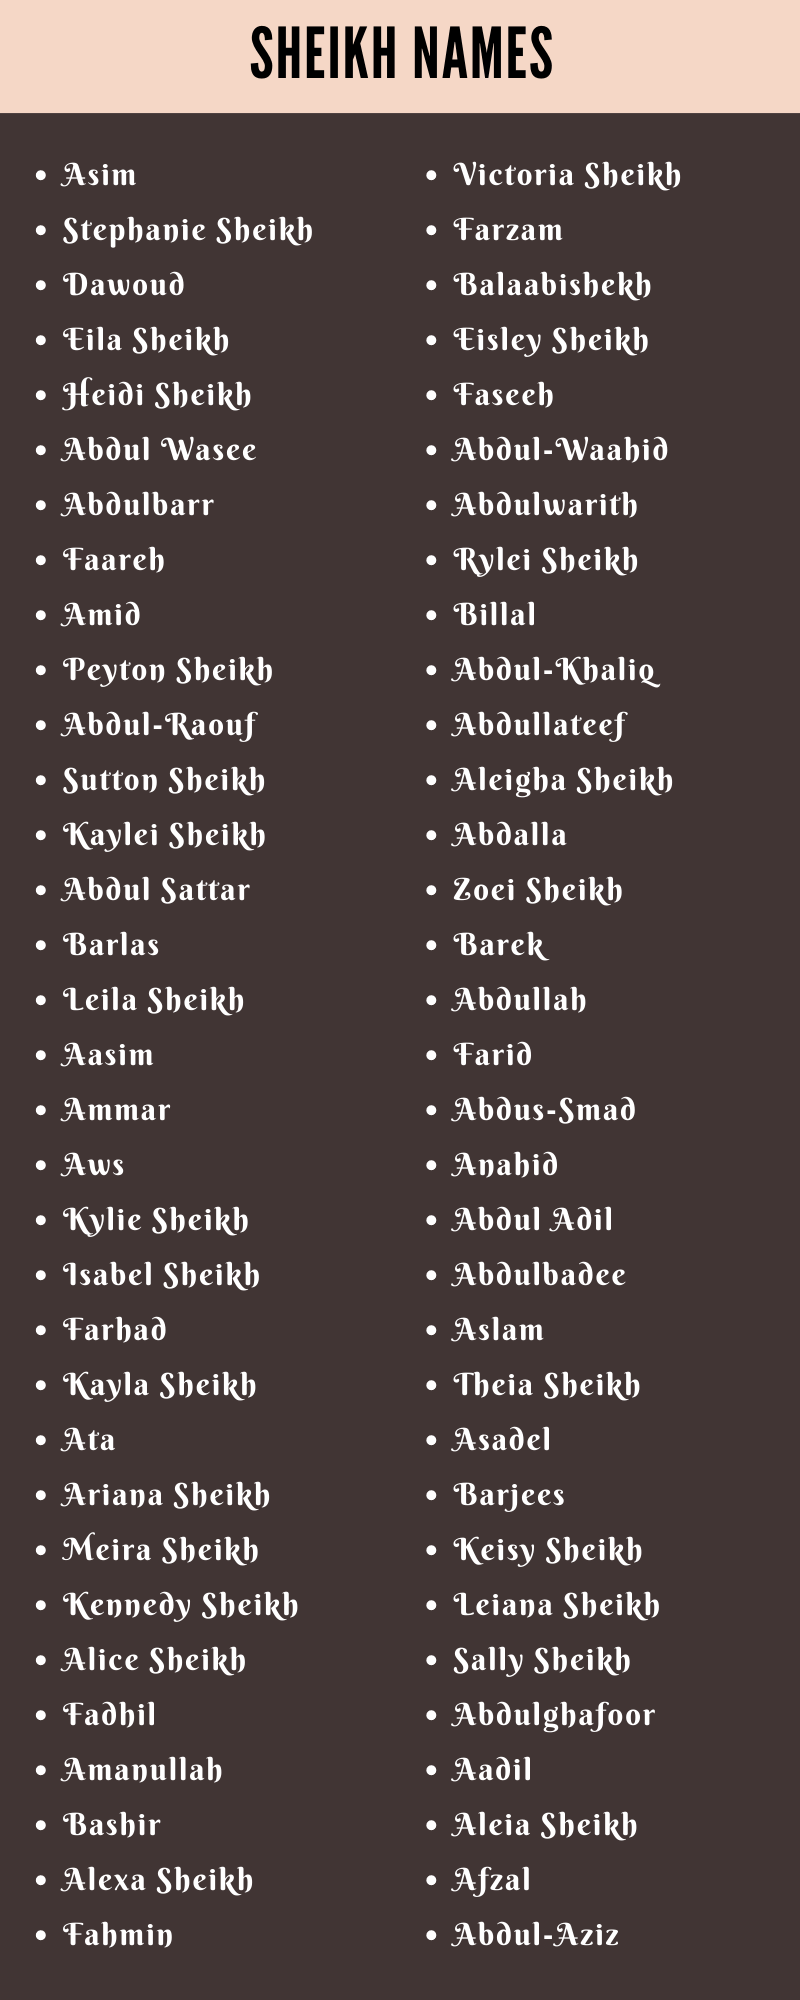 Sheikh Names